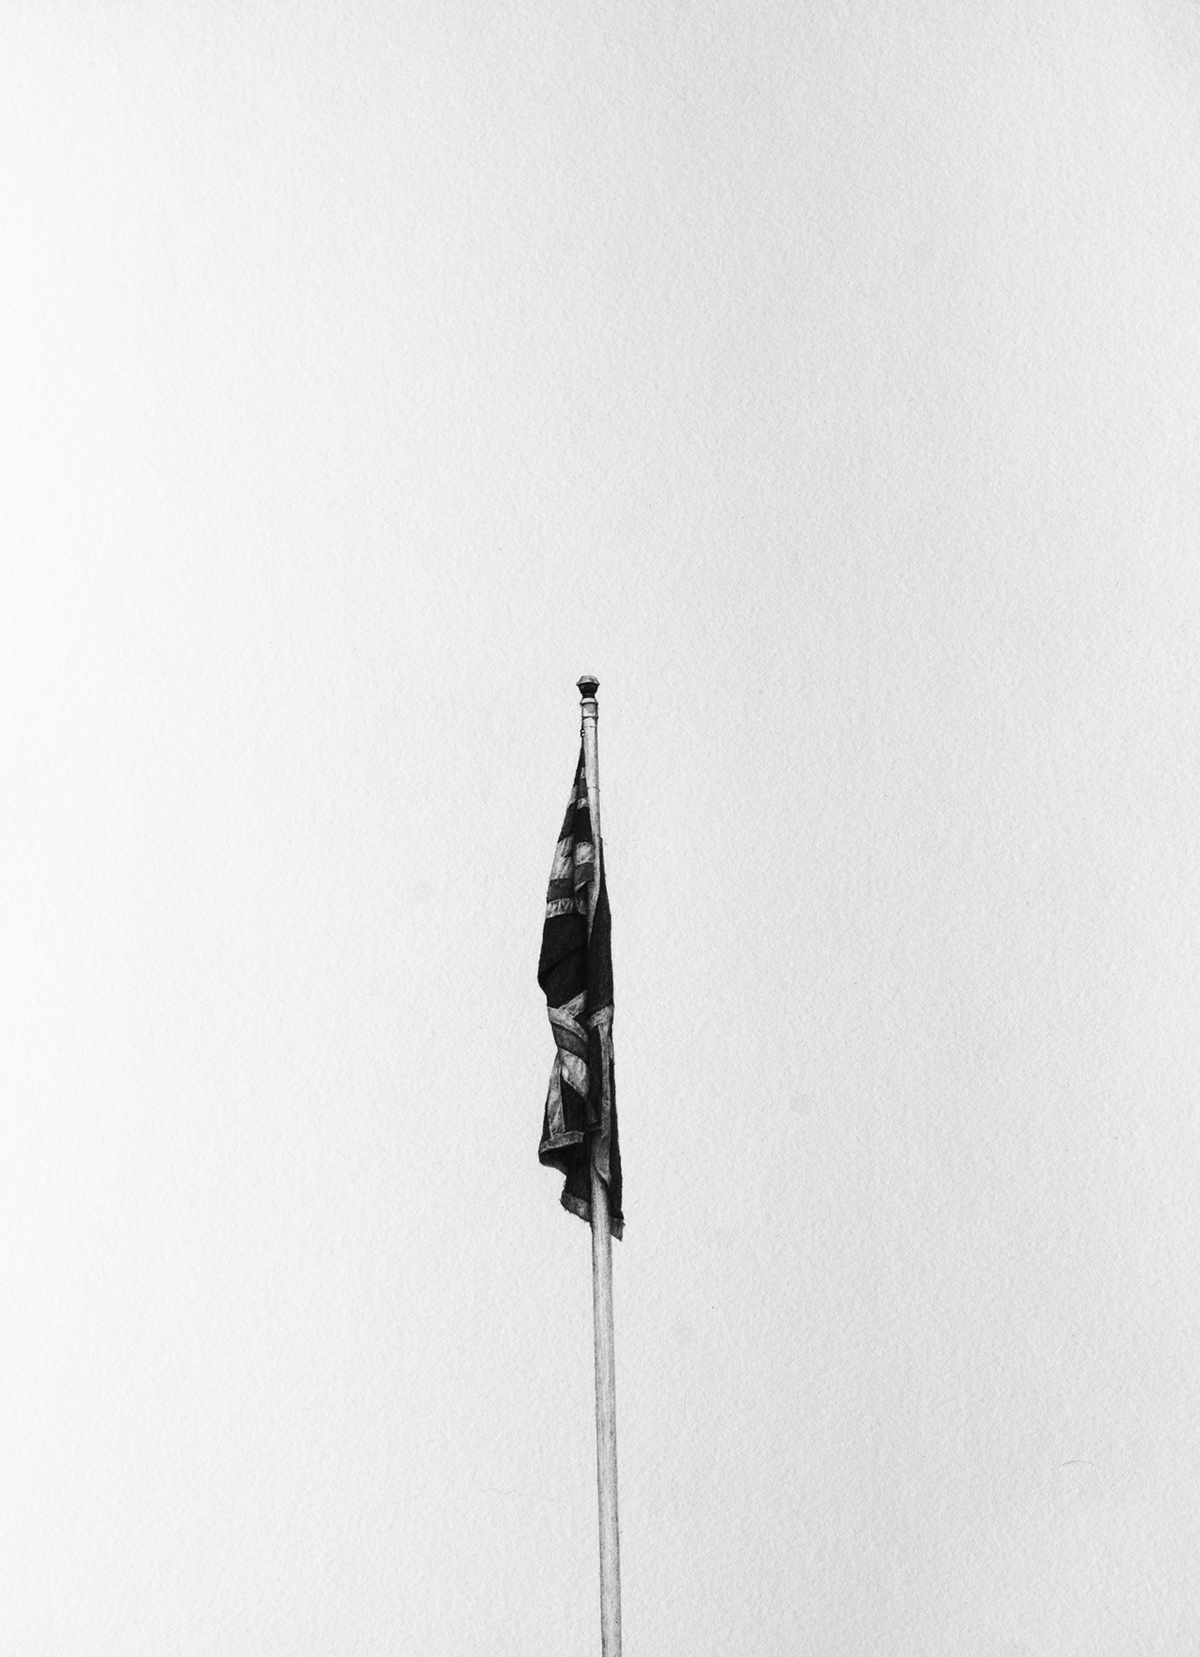 drawings mexico reflection flags flag Bandera pixel Oils oleo pintura miniatura Miniature df